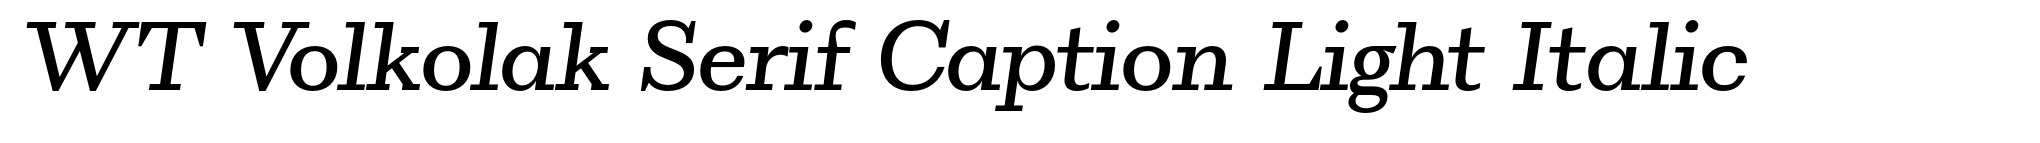 WT Volkolak Serif Caption Light Italic image